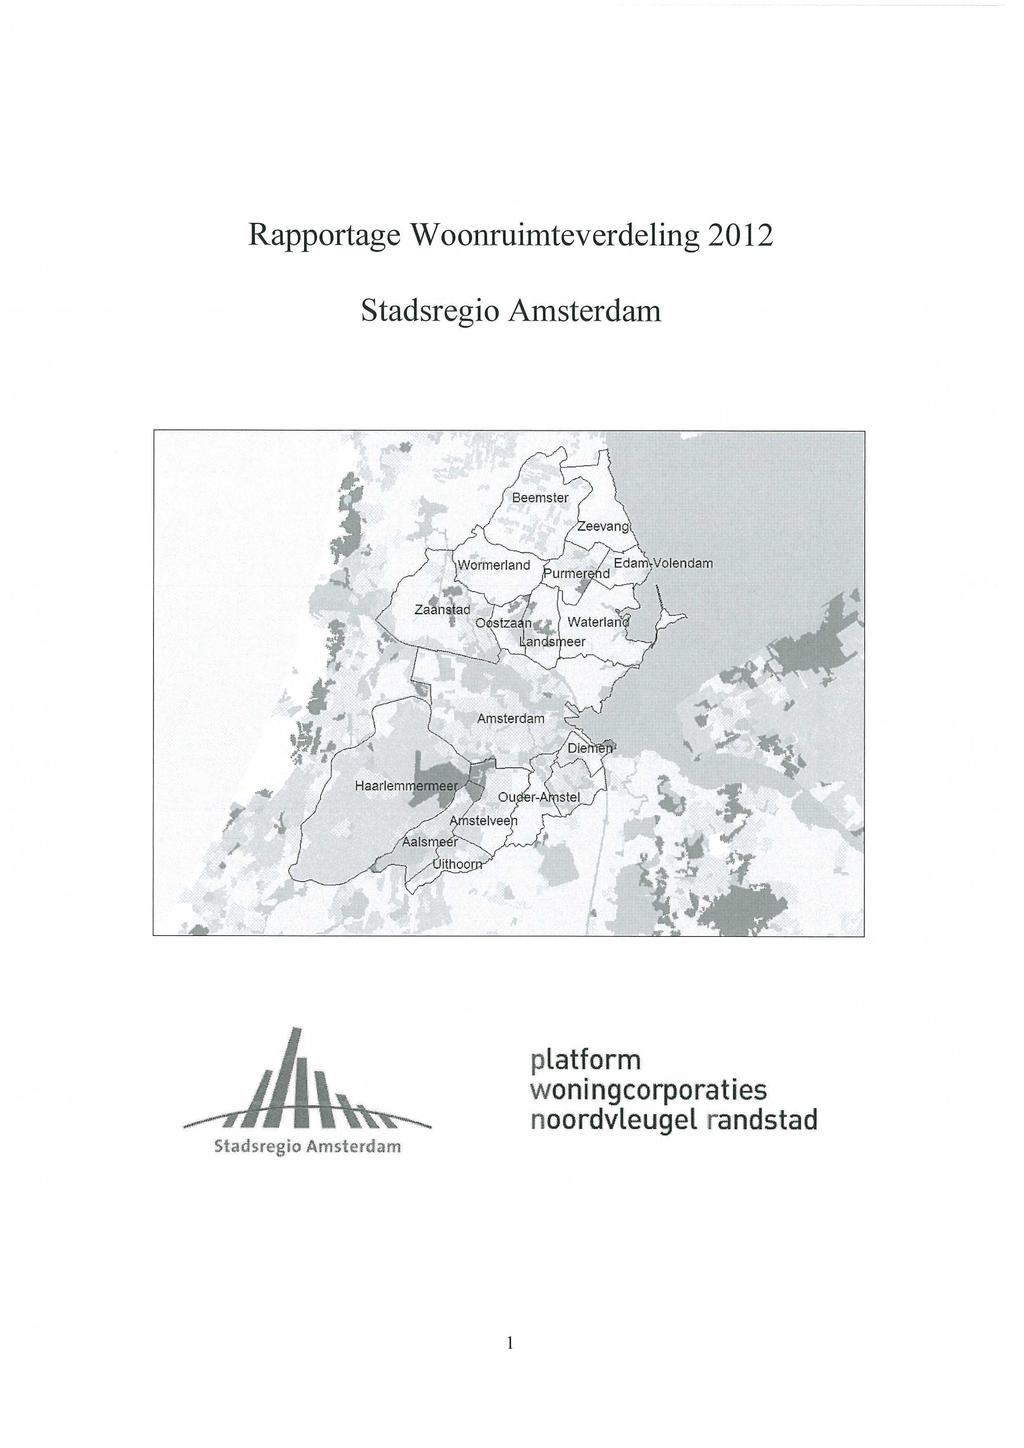 Rapportage Woonruimteverdeling 2012 Stadsregio Amsterdam